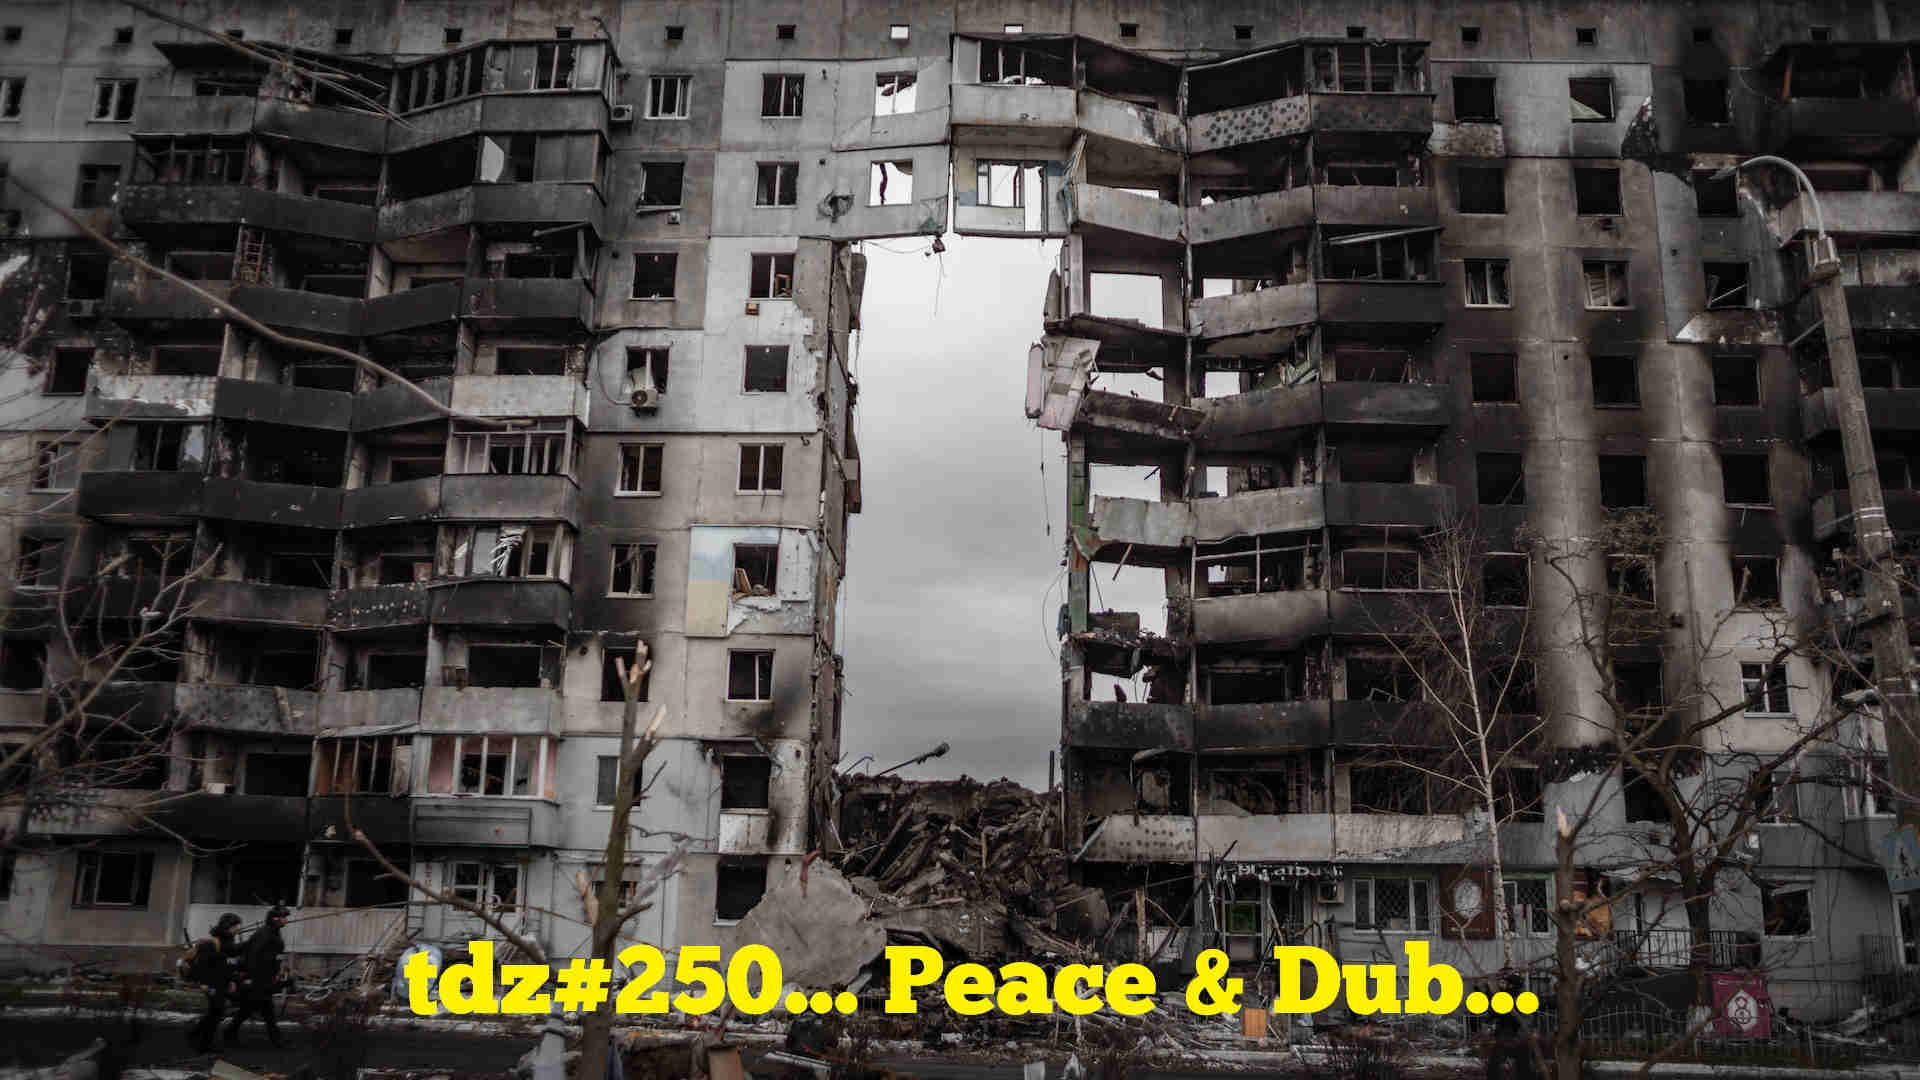 TDZ#251... Peace & Dub...